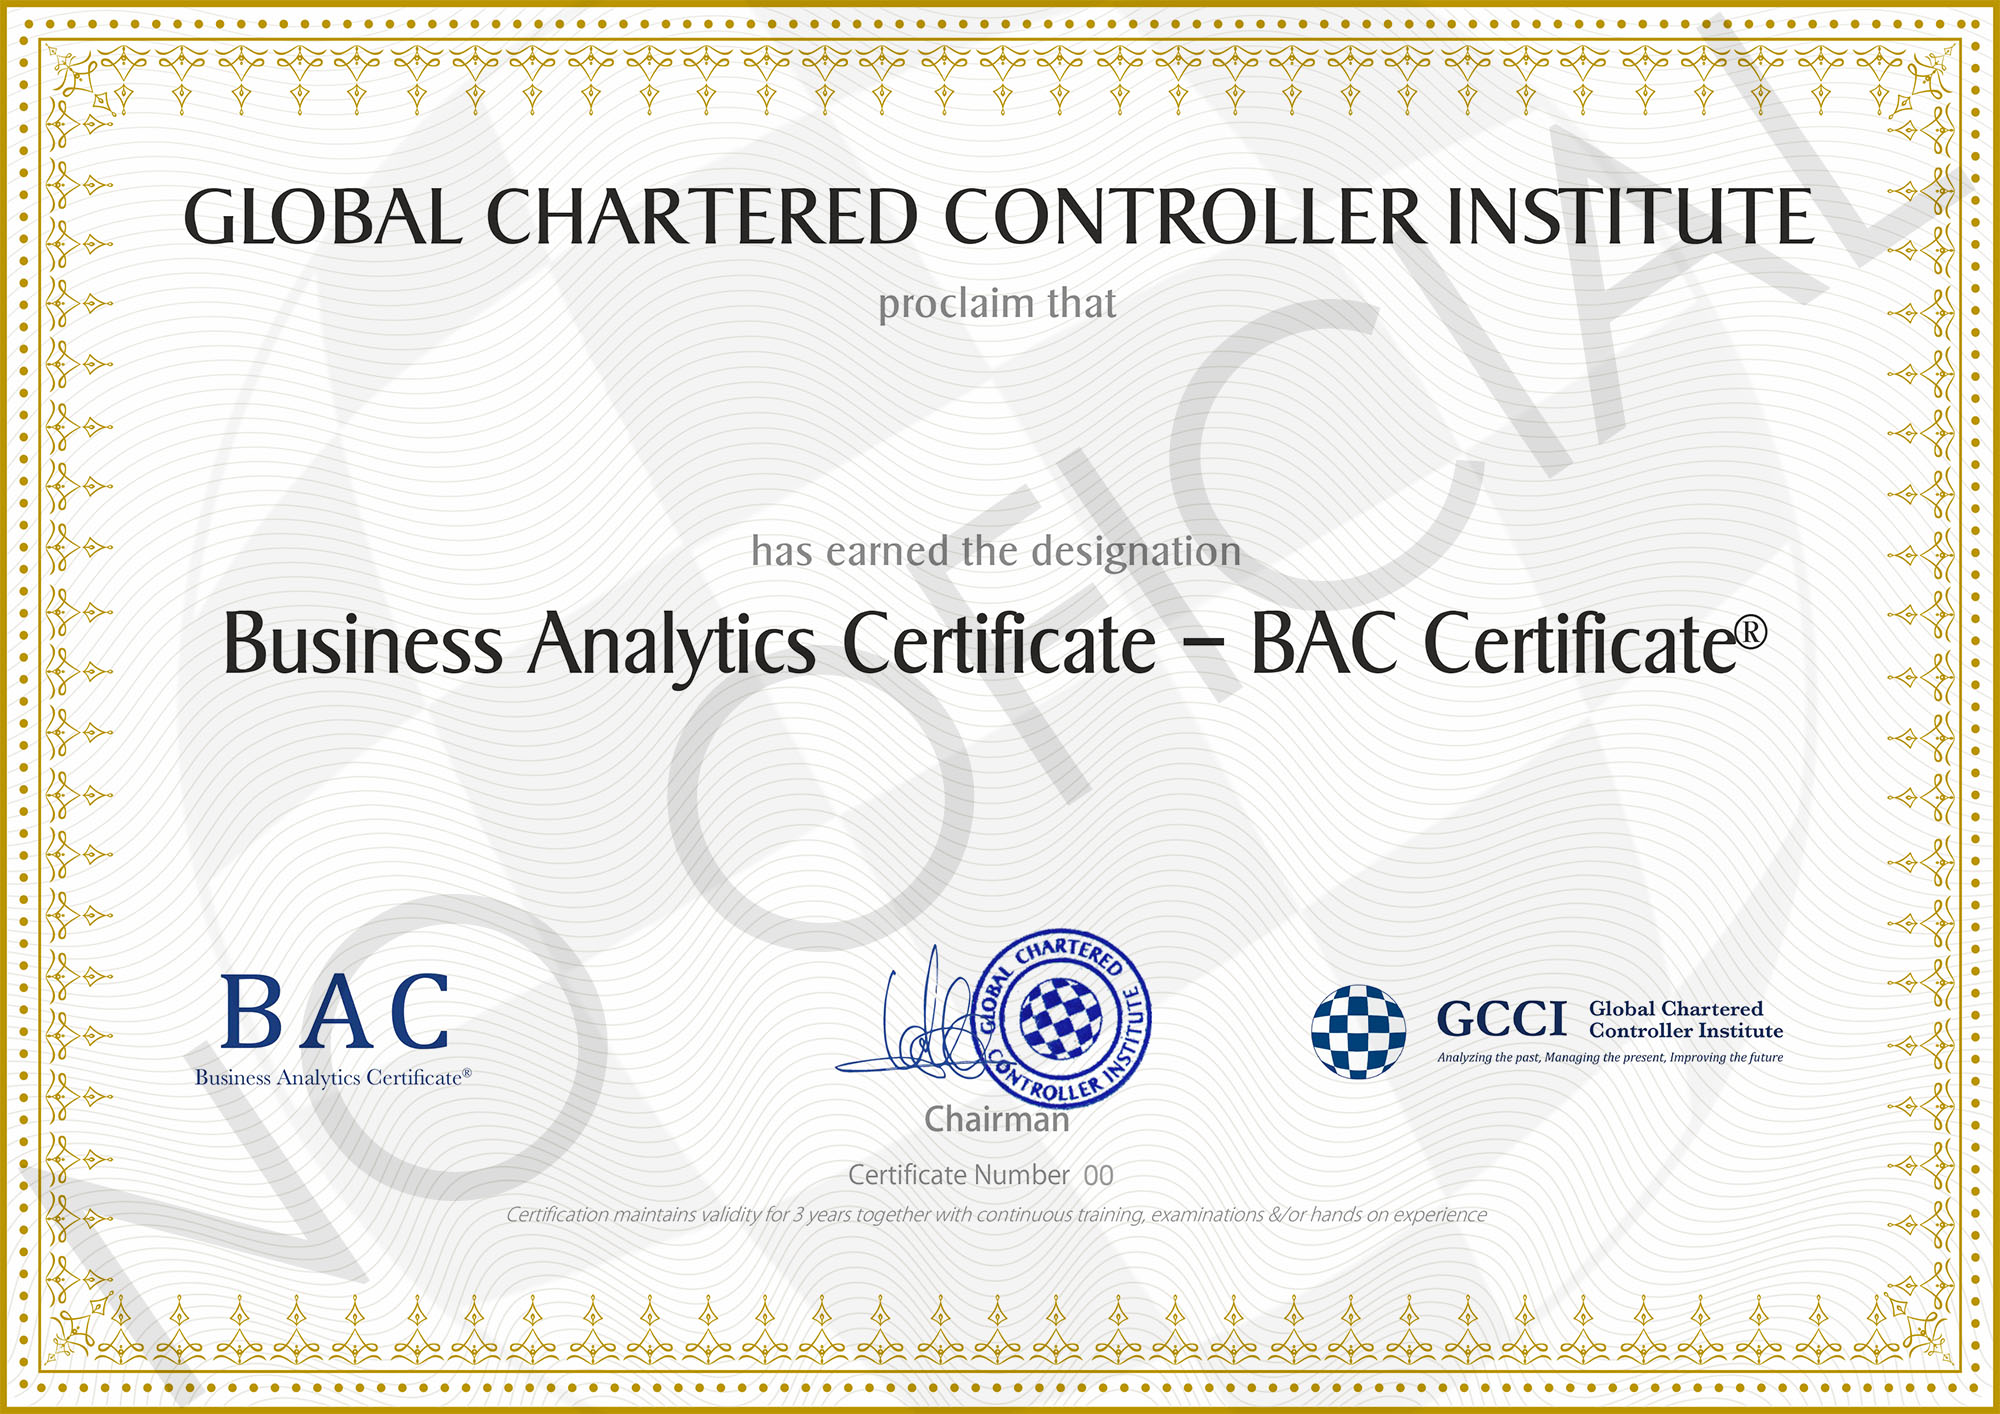 Business Analytics Certificate - BAC